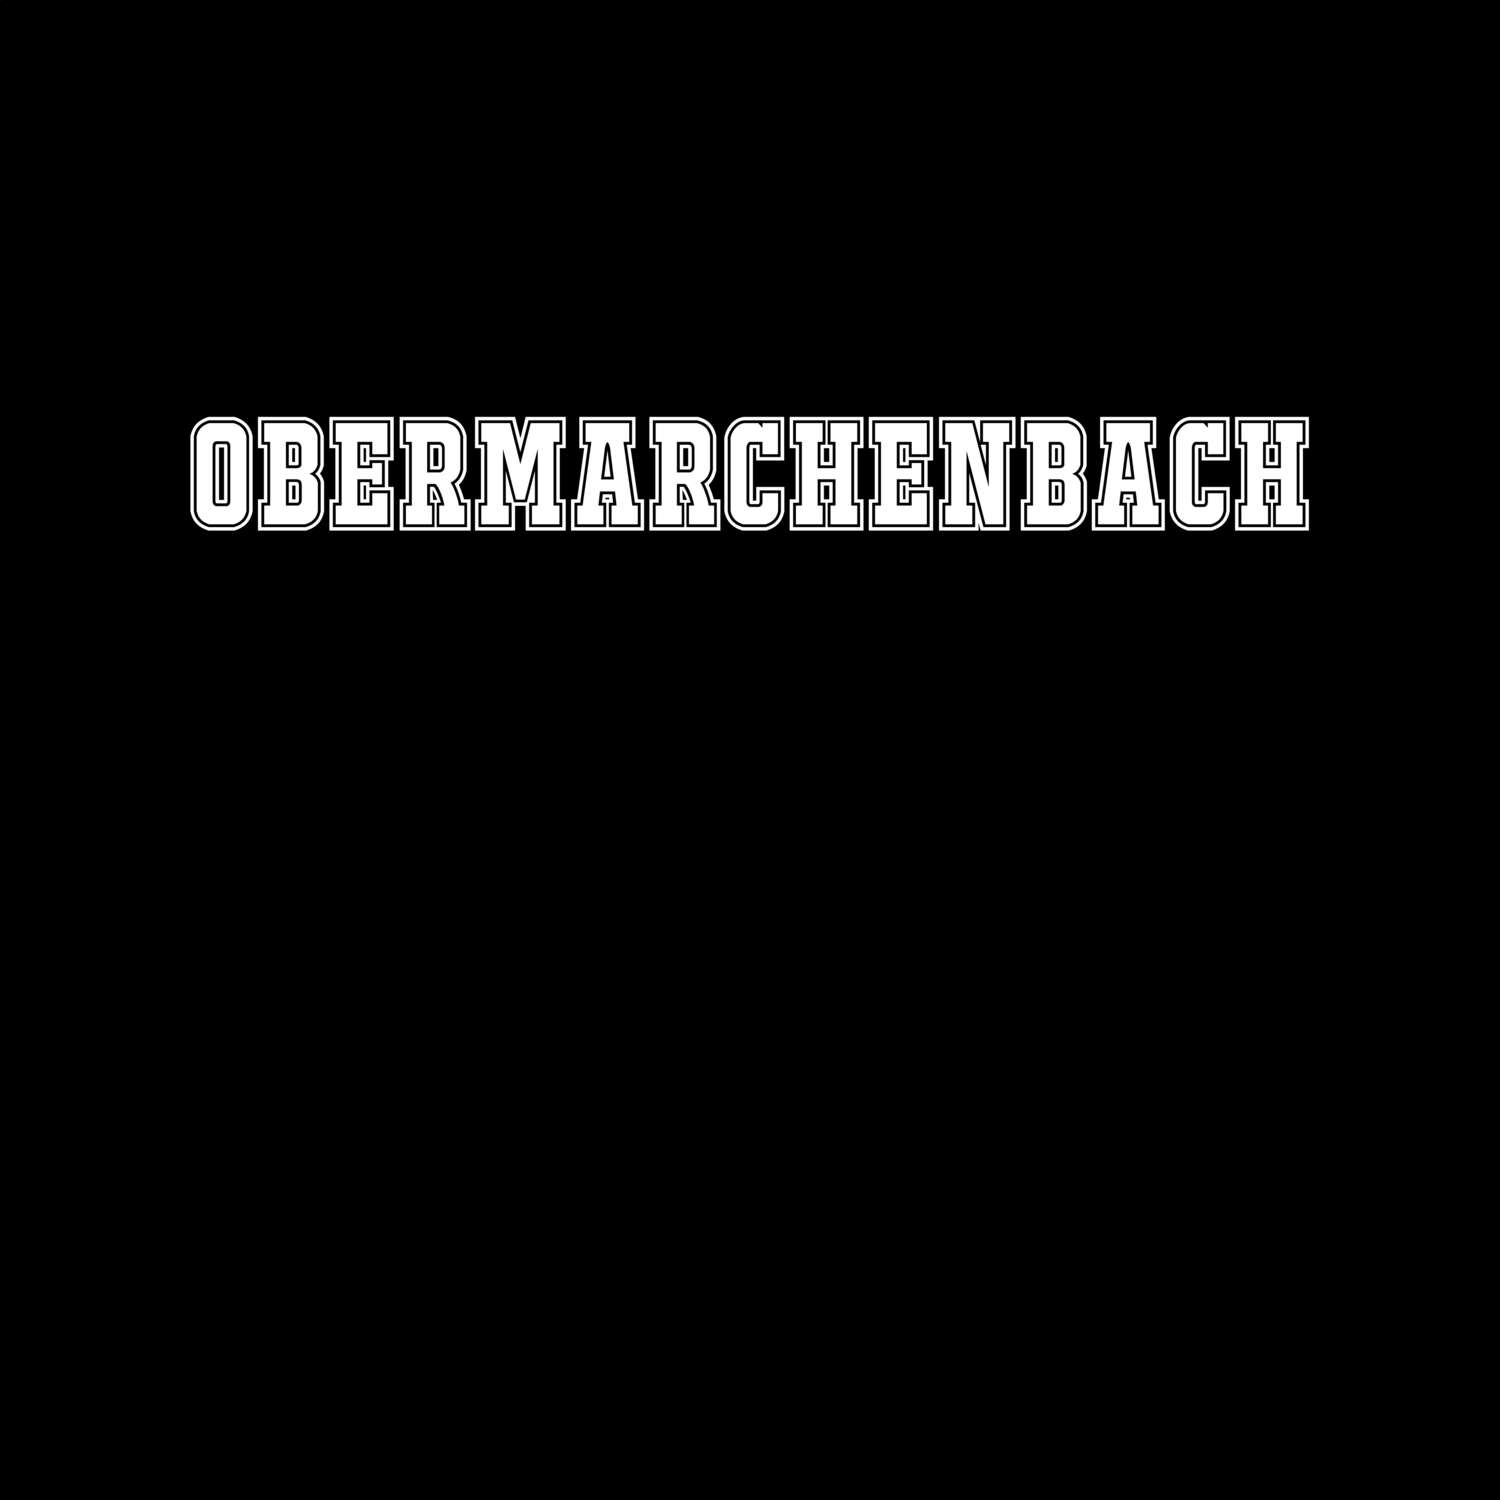 Obermarchenbach T-Shirt »Classic«